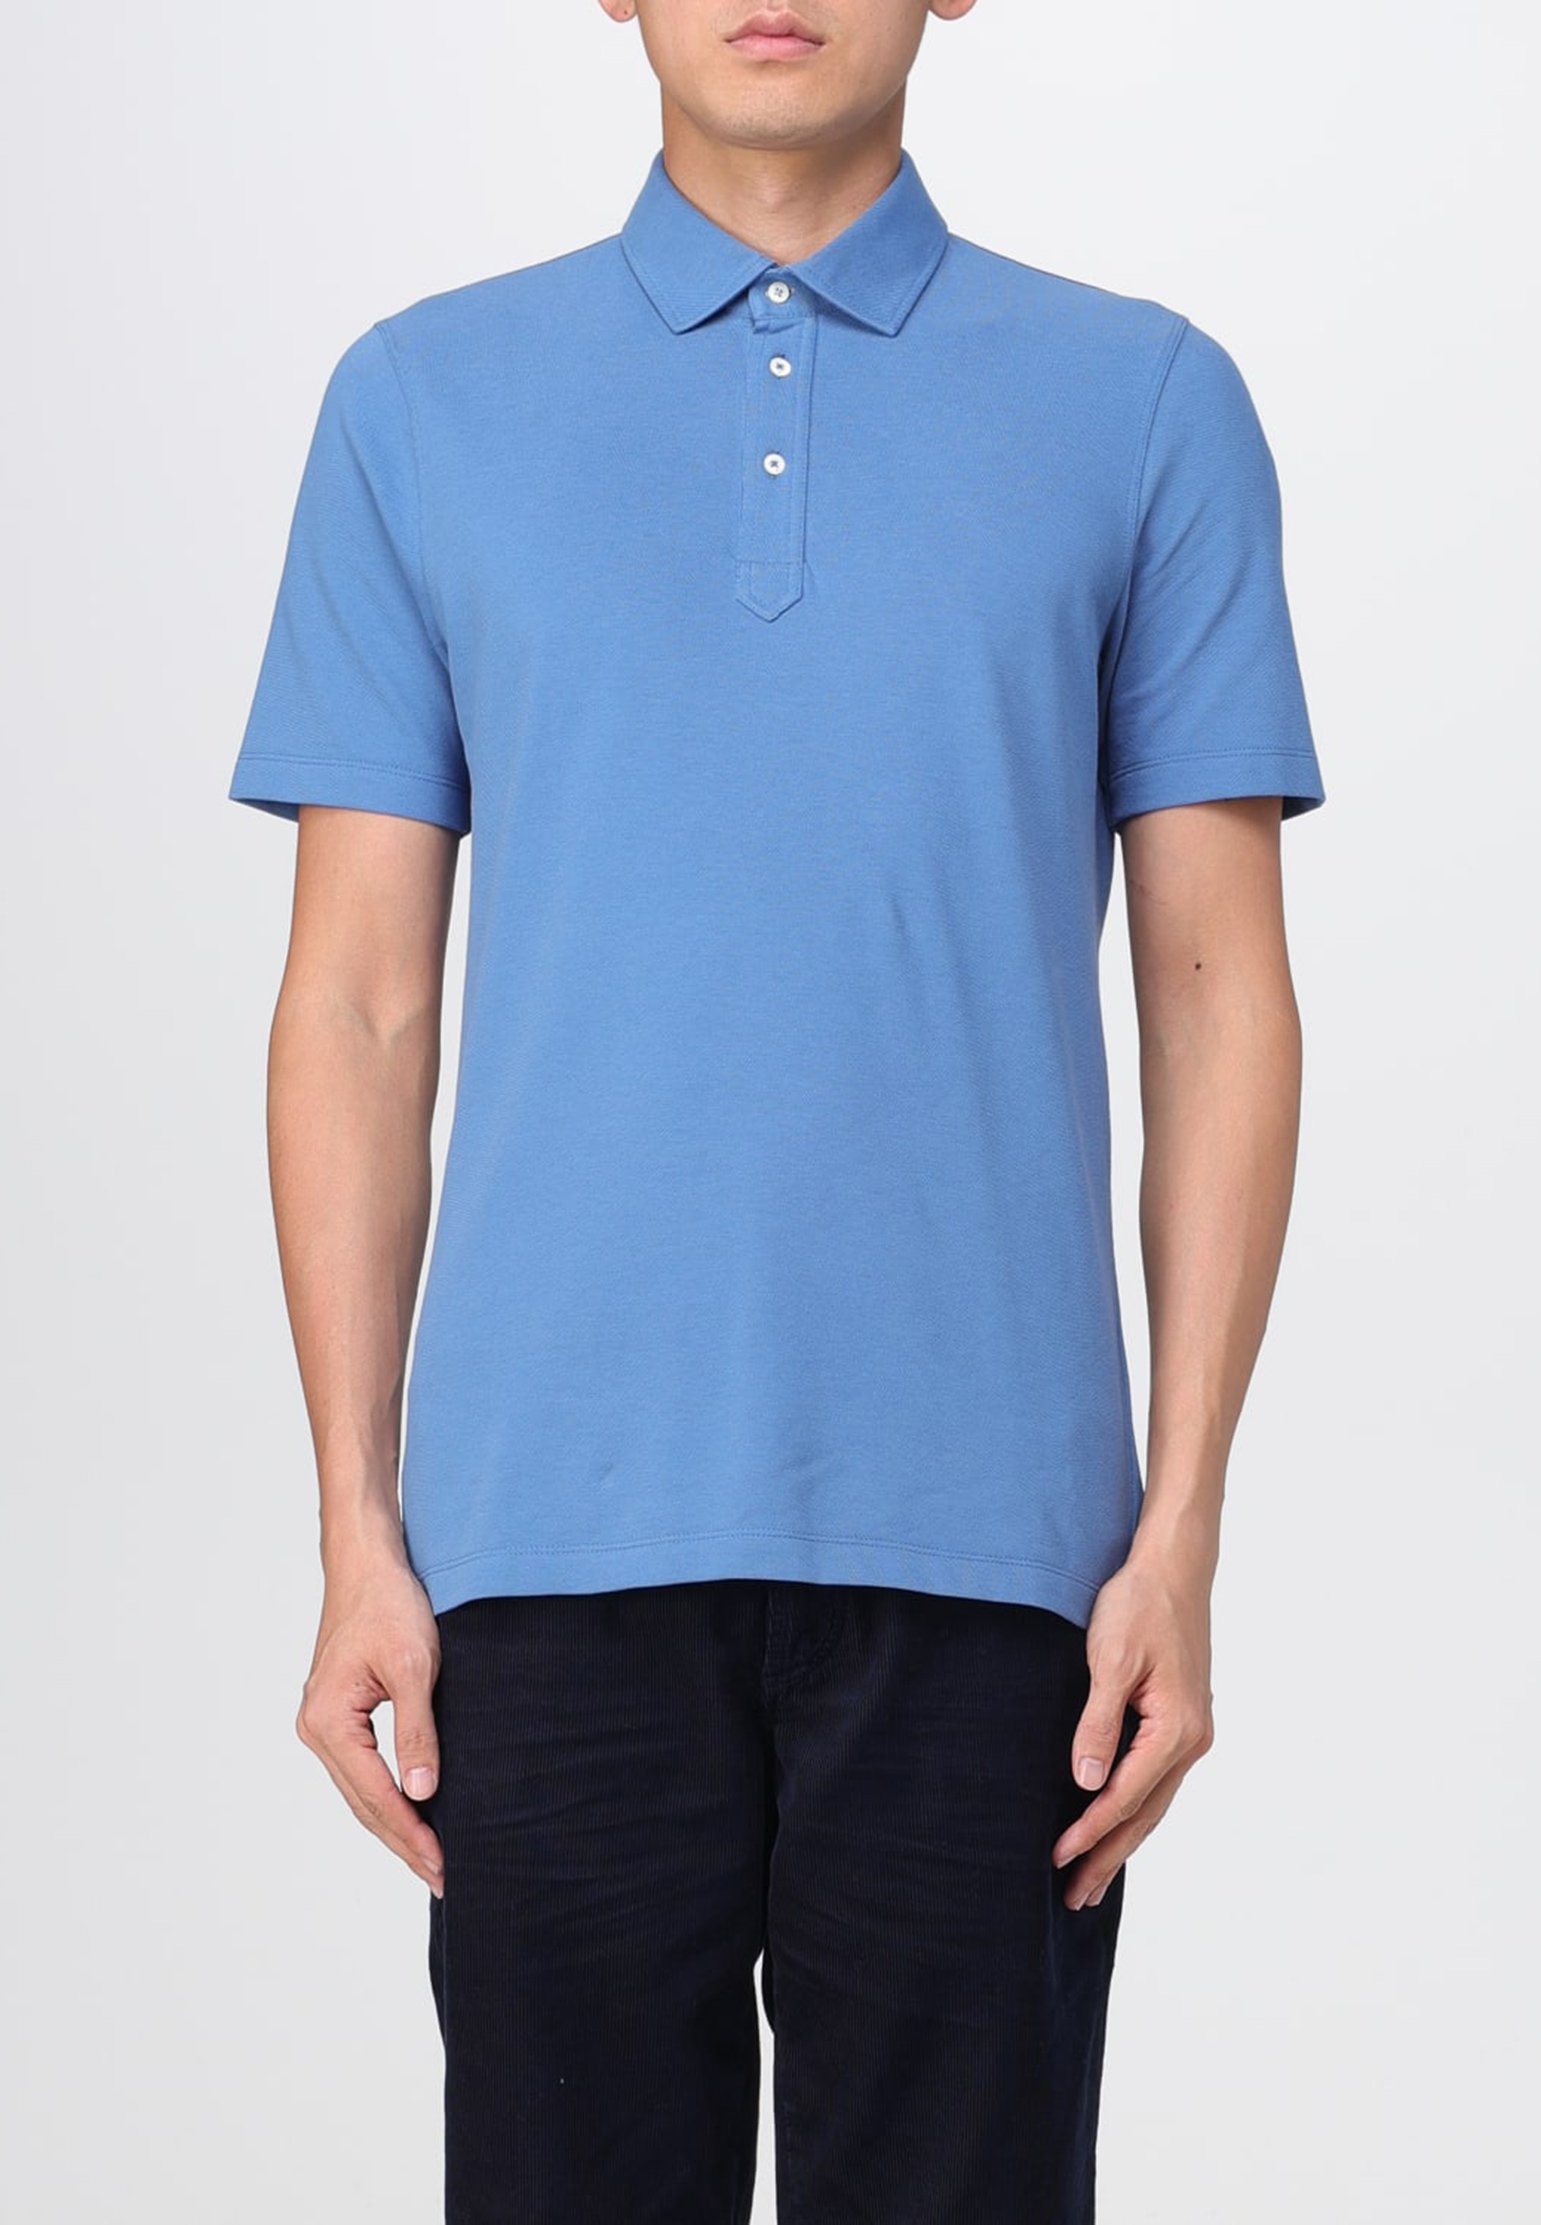 Polo BRUNELLO CUCINELLI Color: navy blue (Code: 1185) in online store Allure